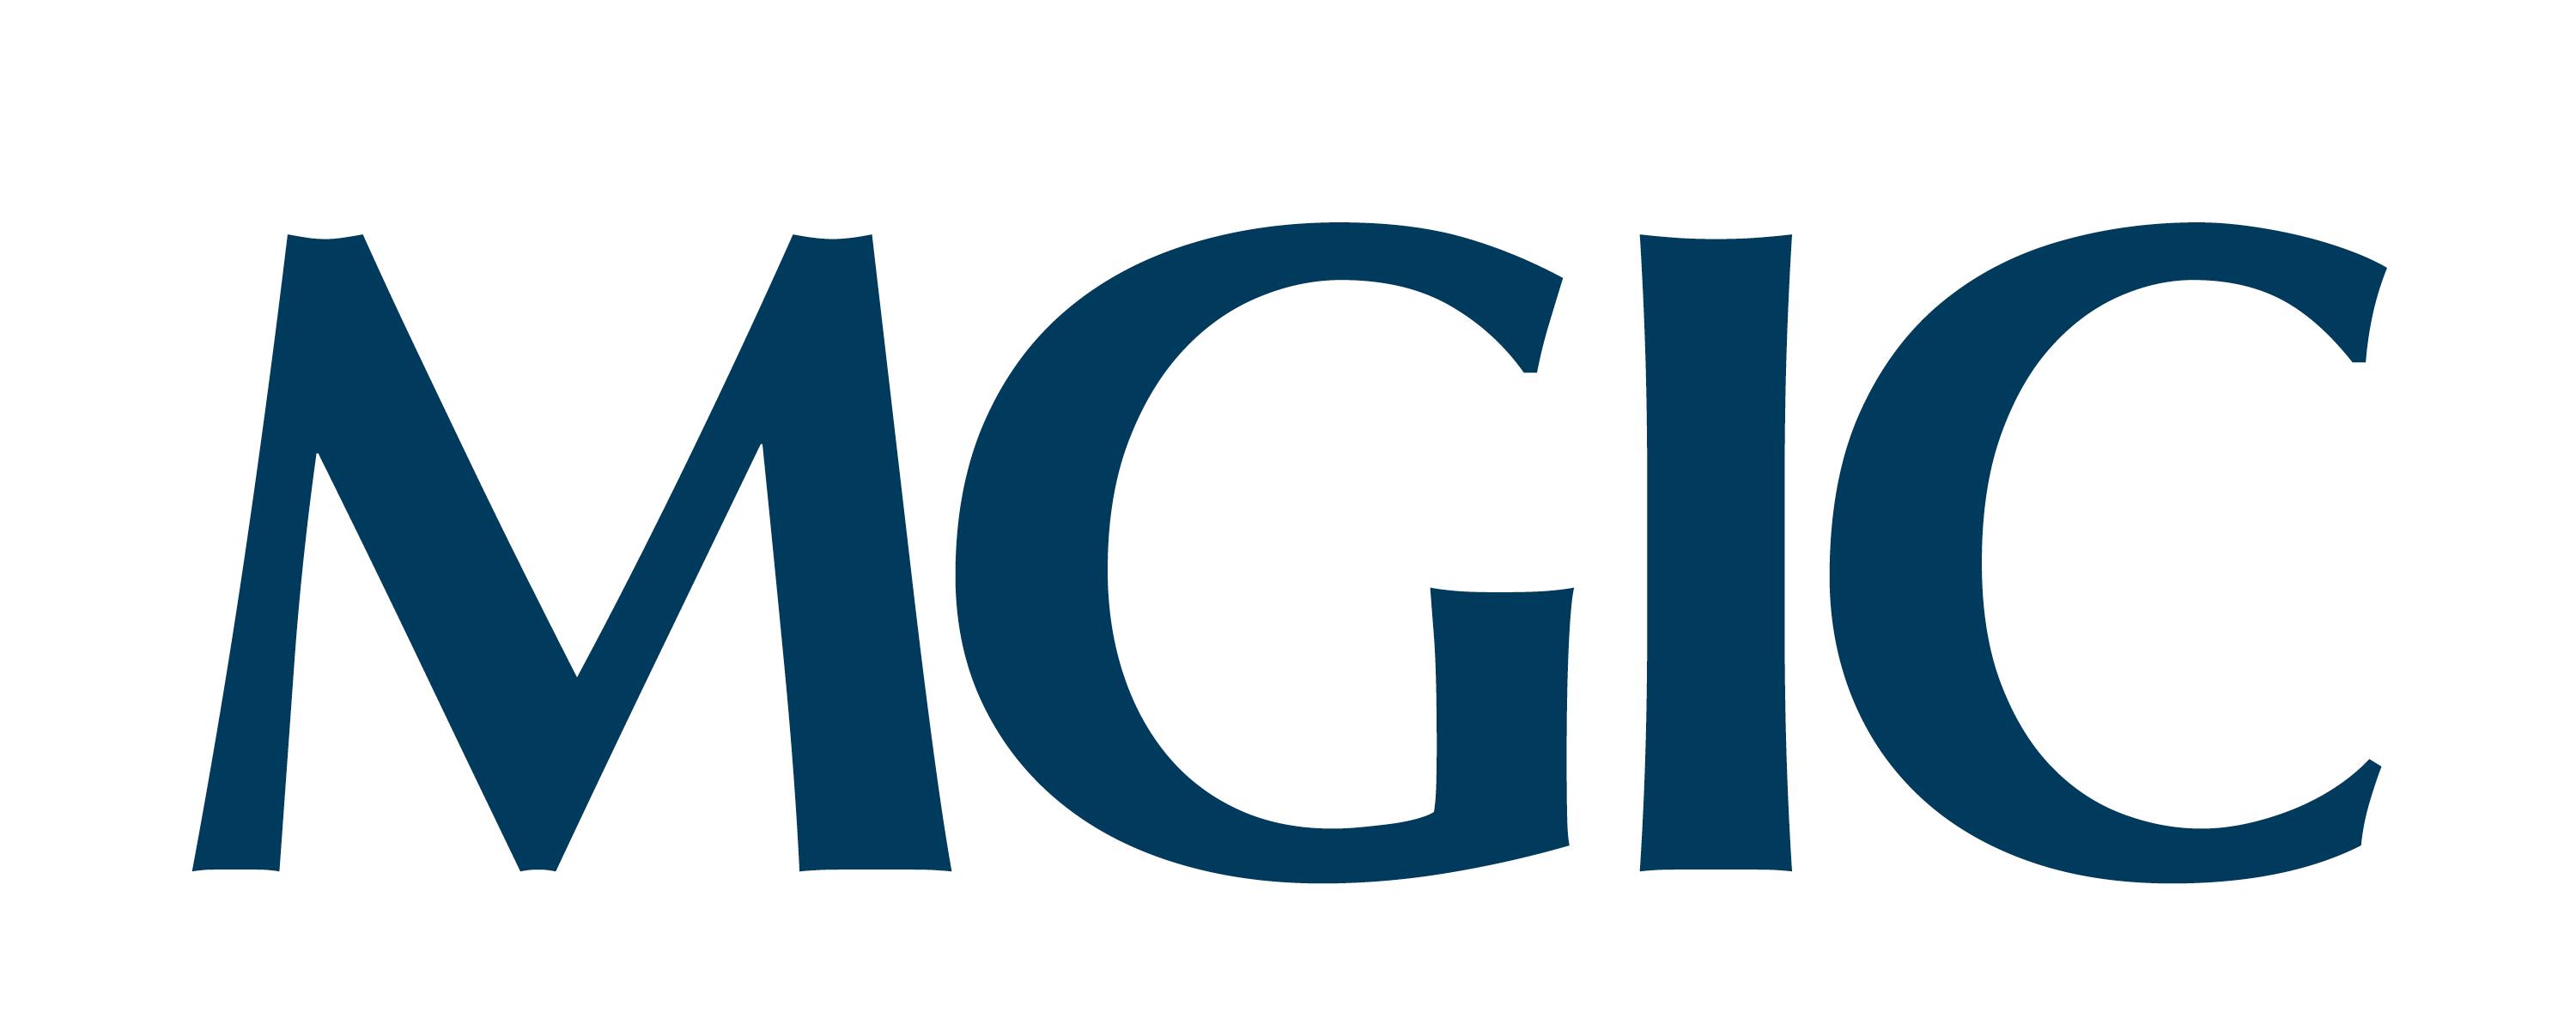 MGIC-logo-navy-3000x1200.jpg